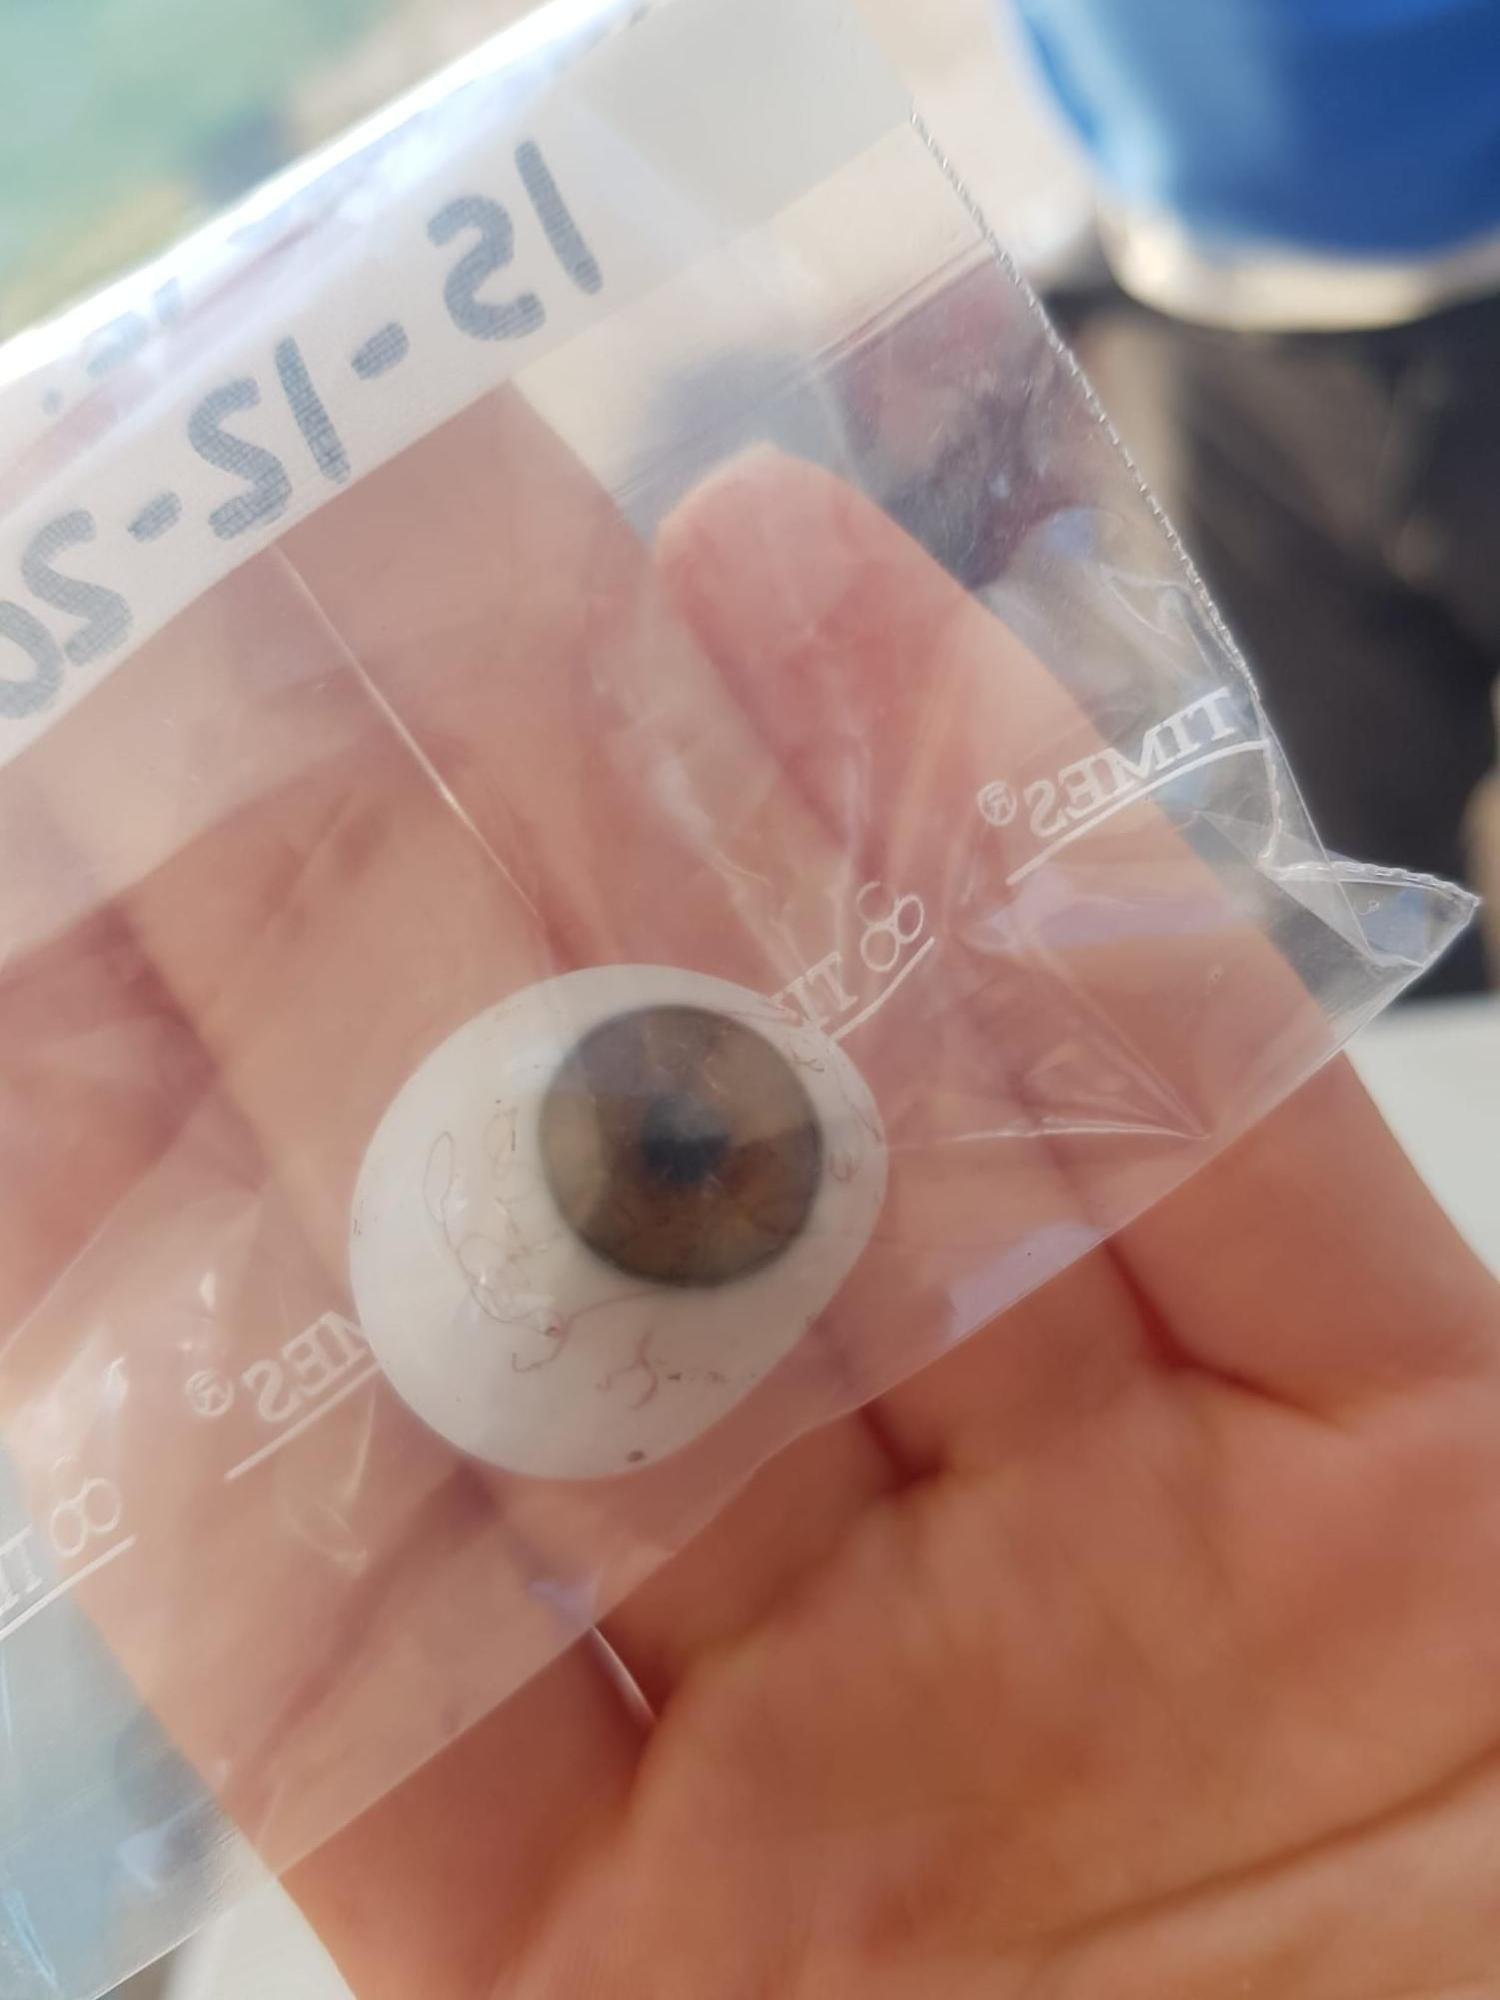 El ojo de cristal que ha servido para identificar al aspense fusilado